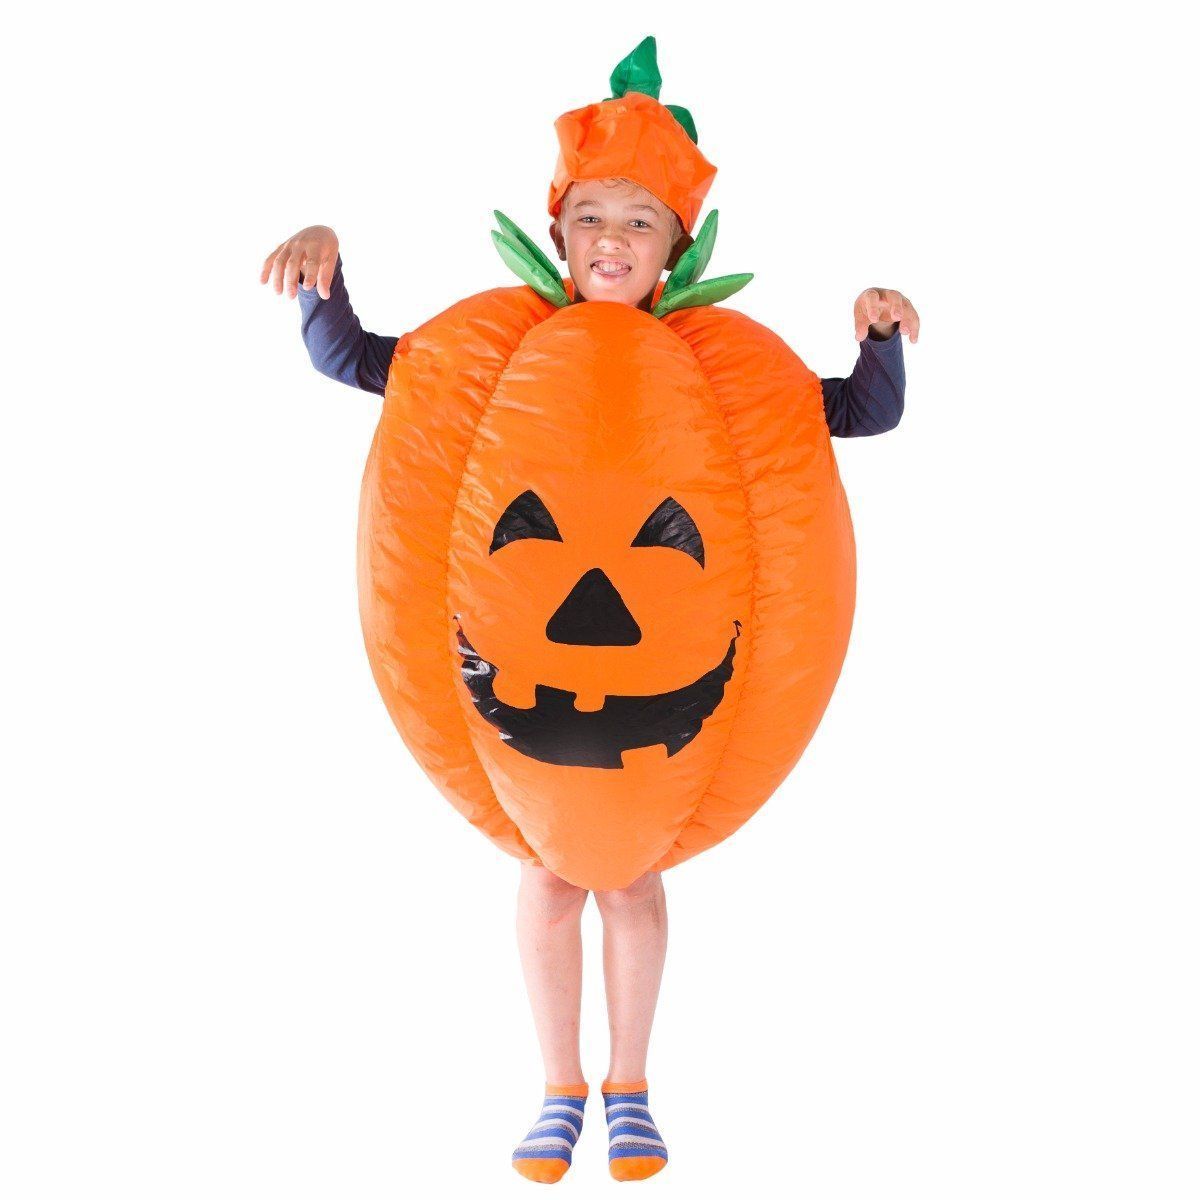 Fancy Dress - Kids Inflatable Pumpkin Costume